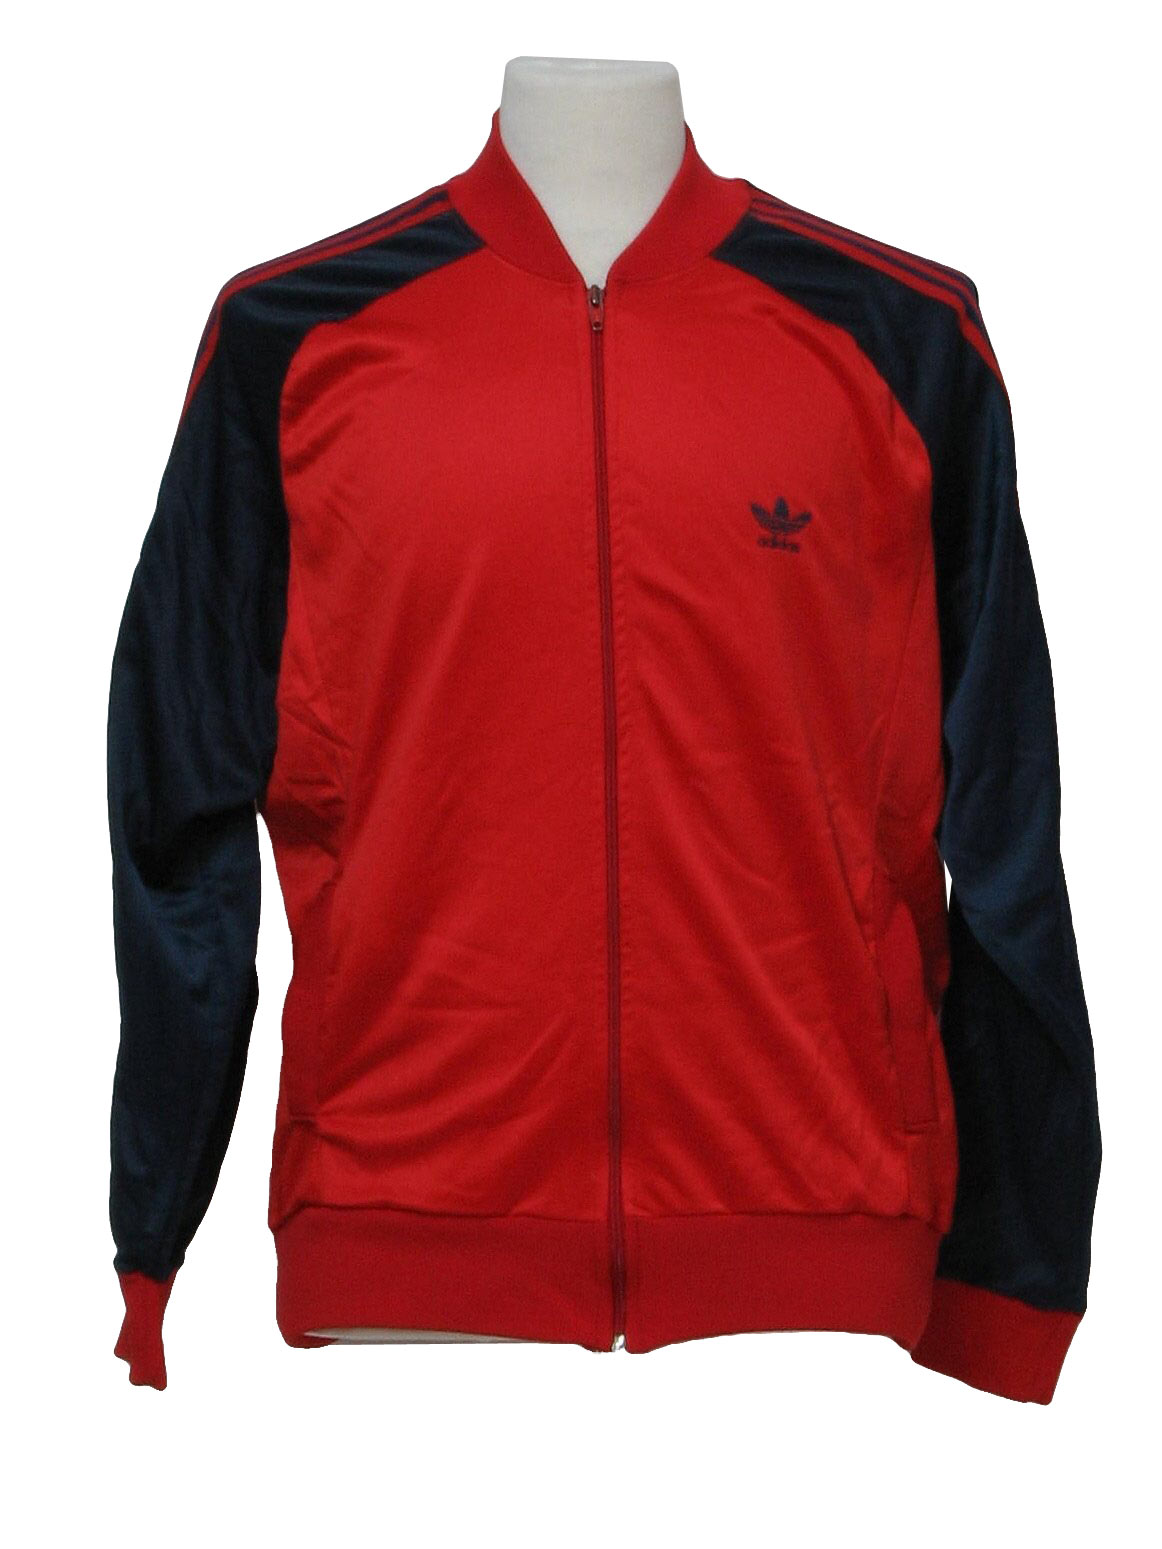 80s Retro Jacket: 80s -Adidas- Mens shiny red and dark blue down